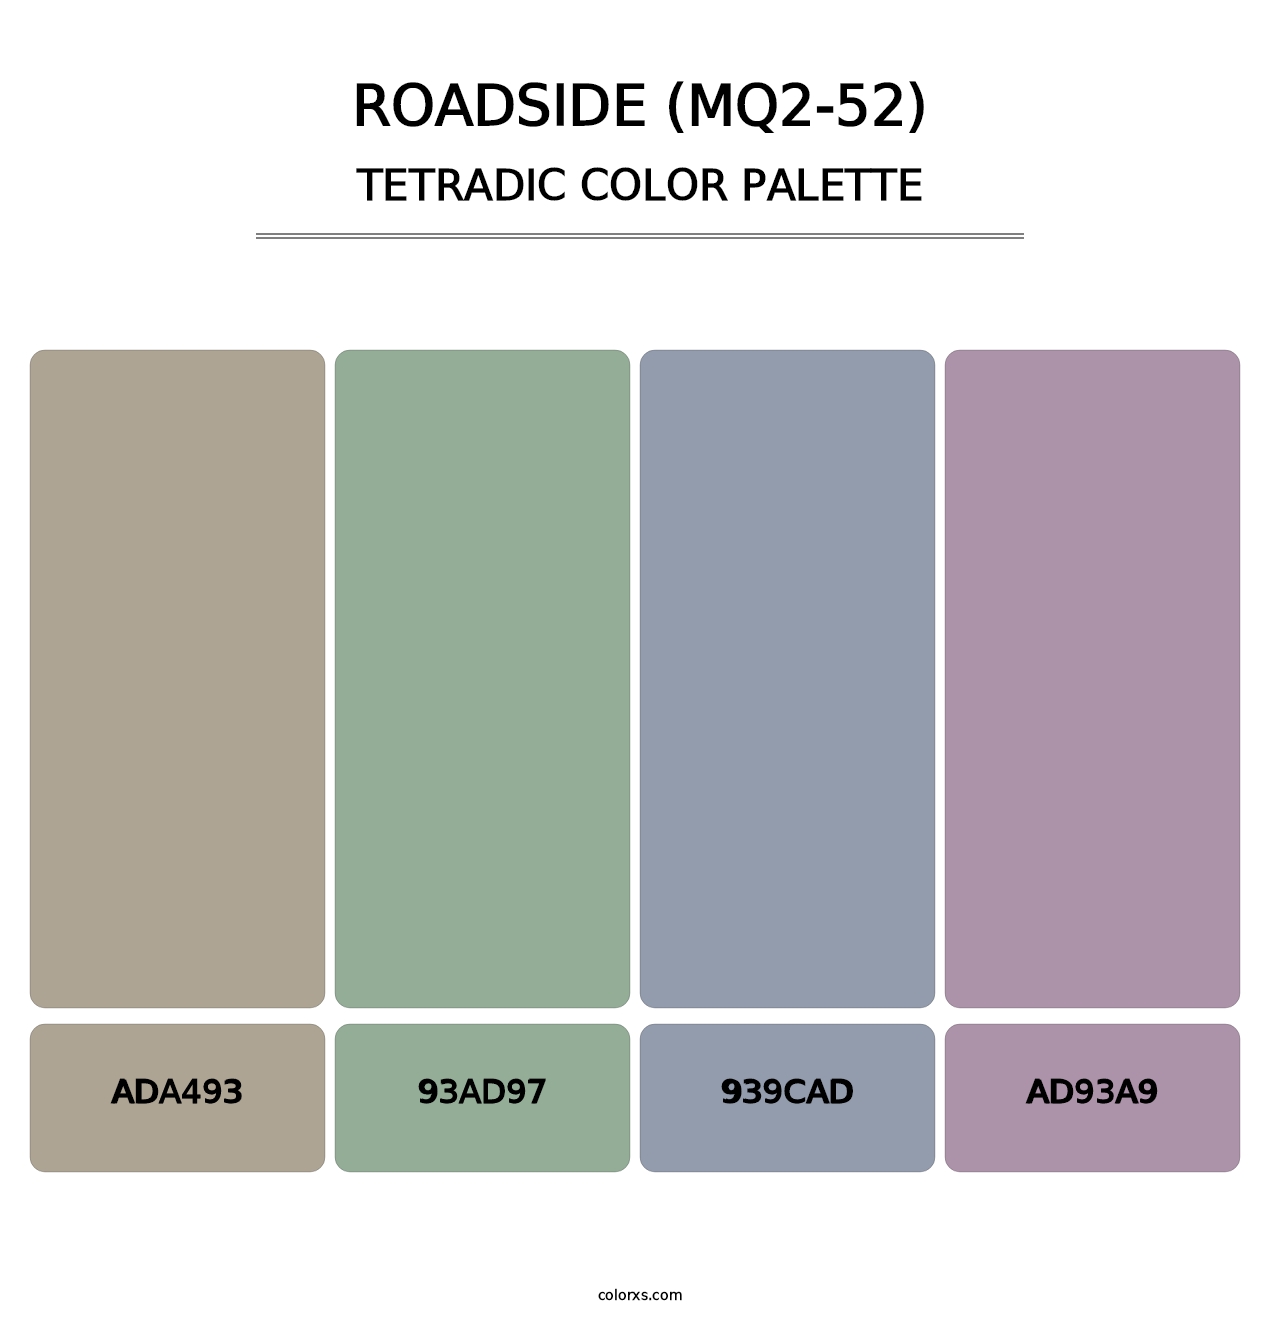 Roadside (MQ2-52) - Tetradic Color Palette